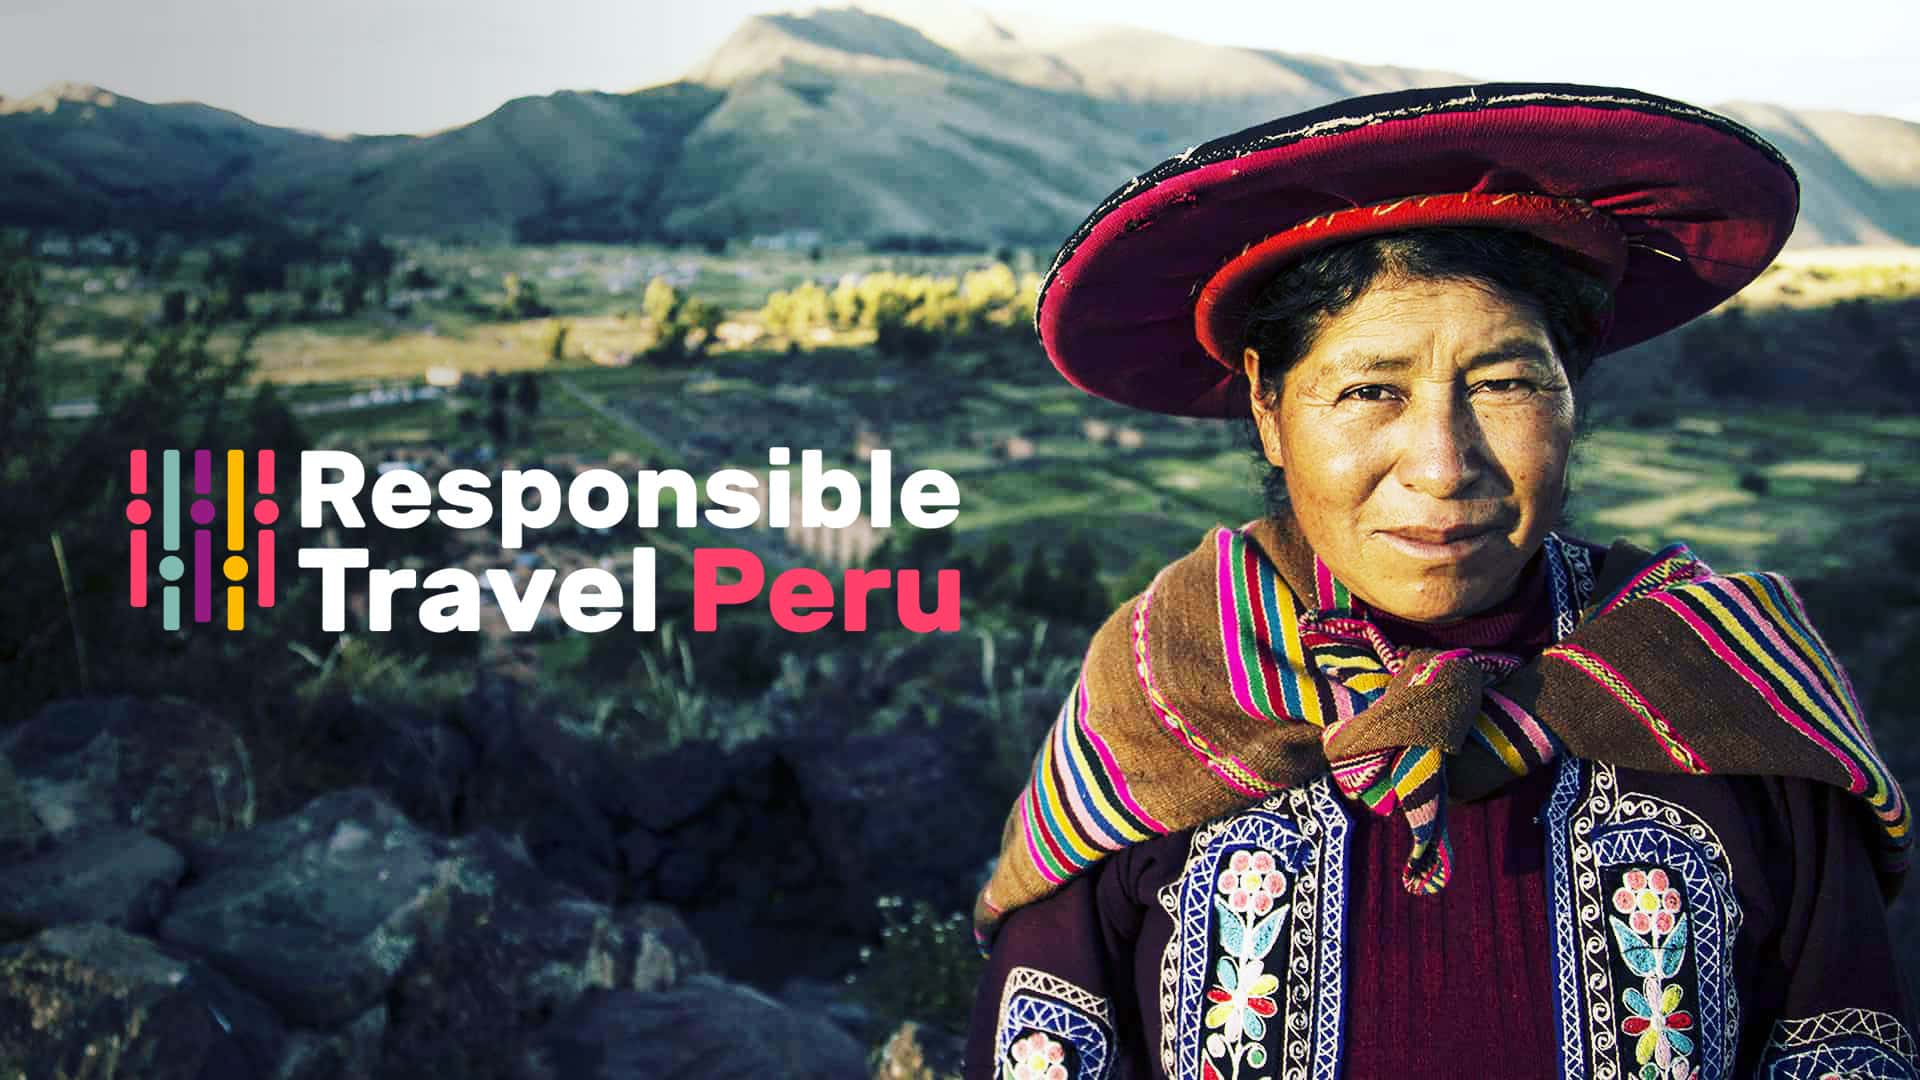 Responsible Travel Peru